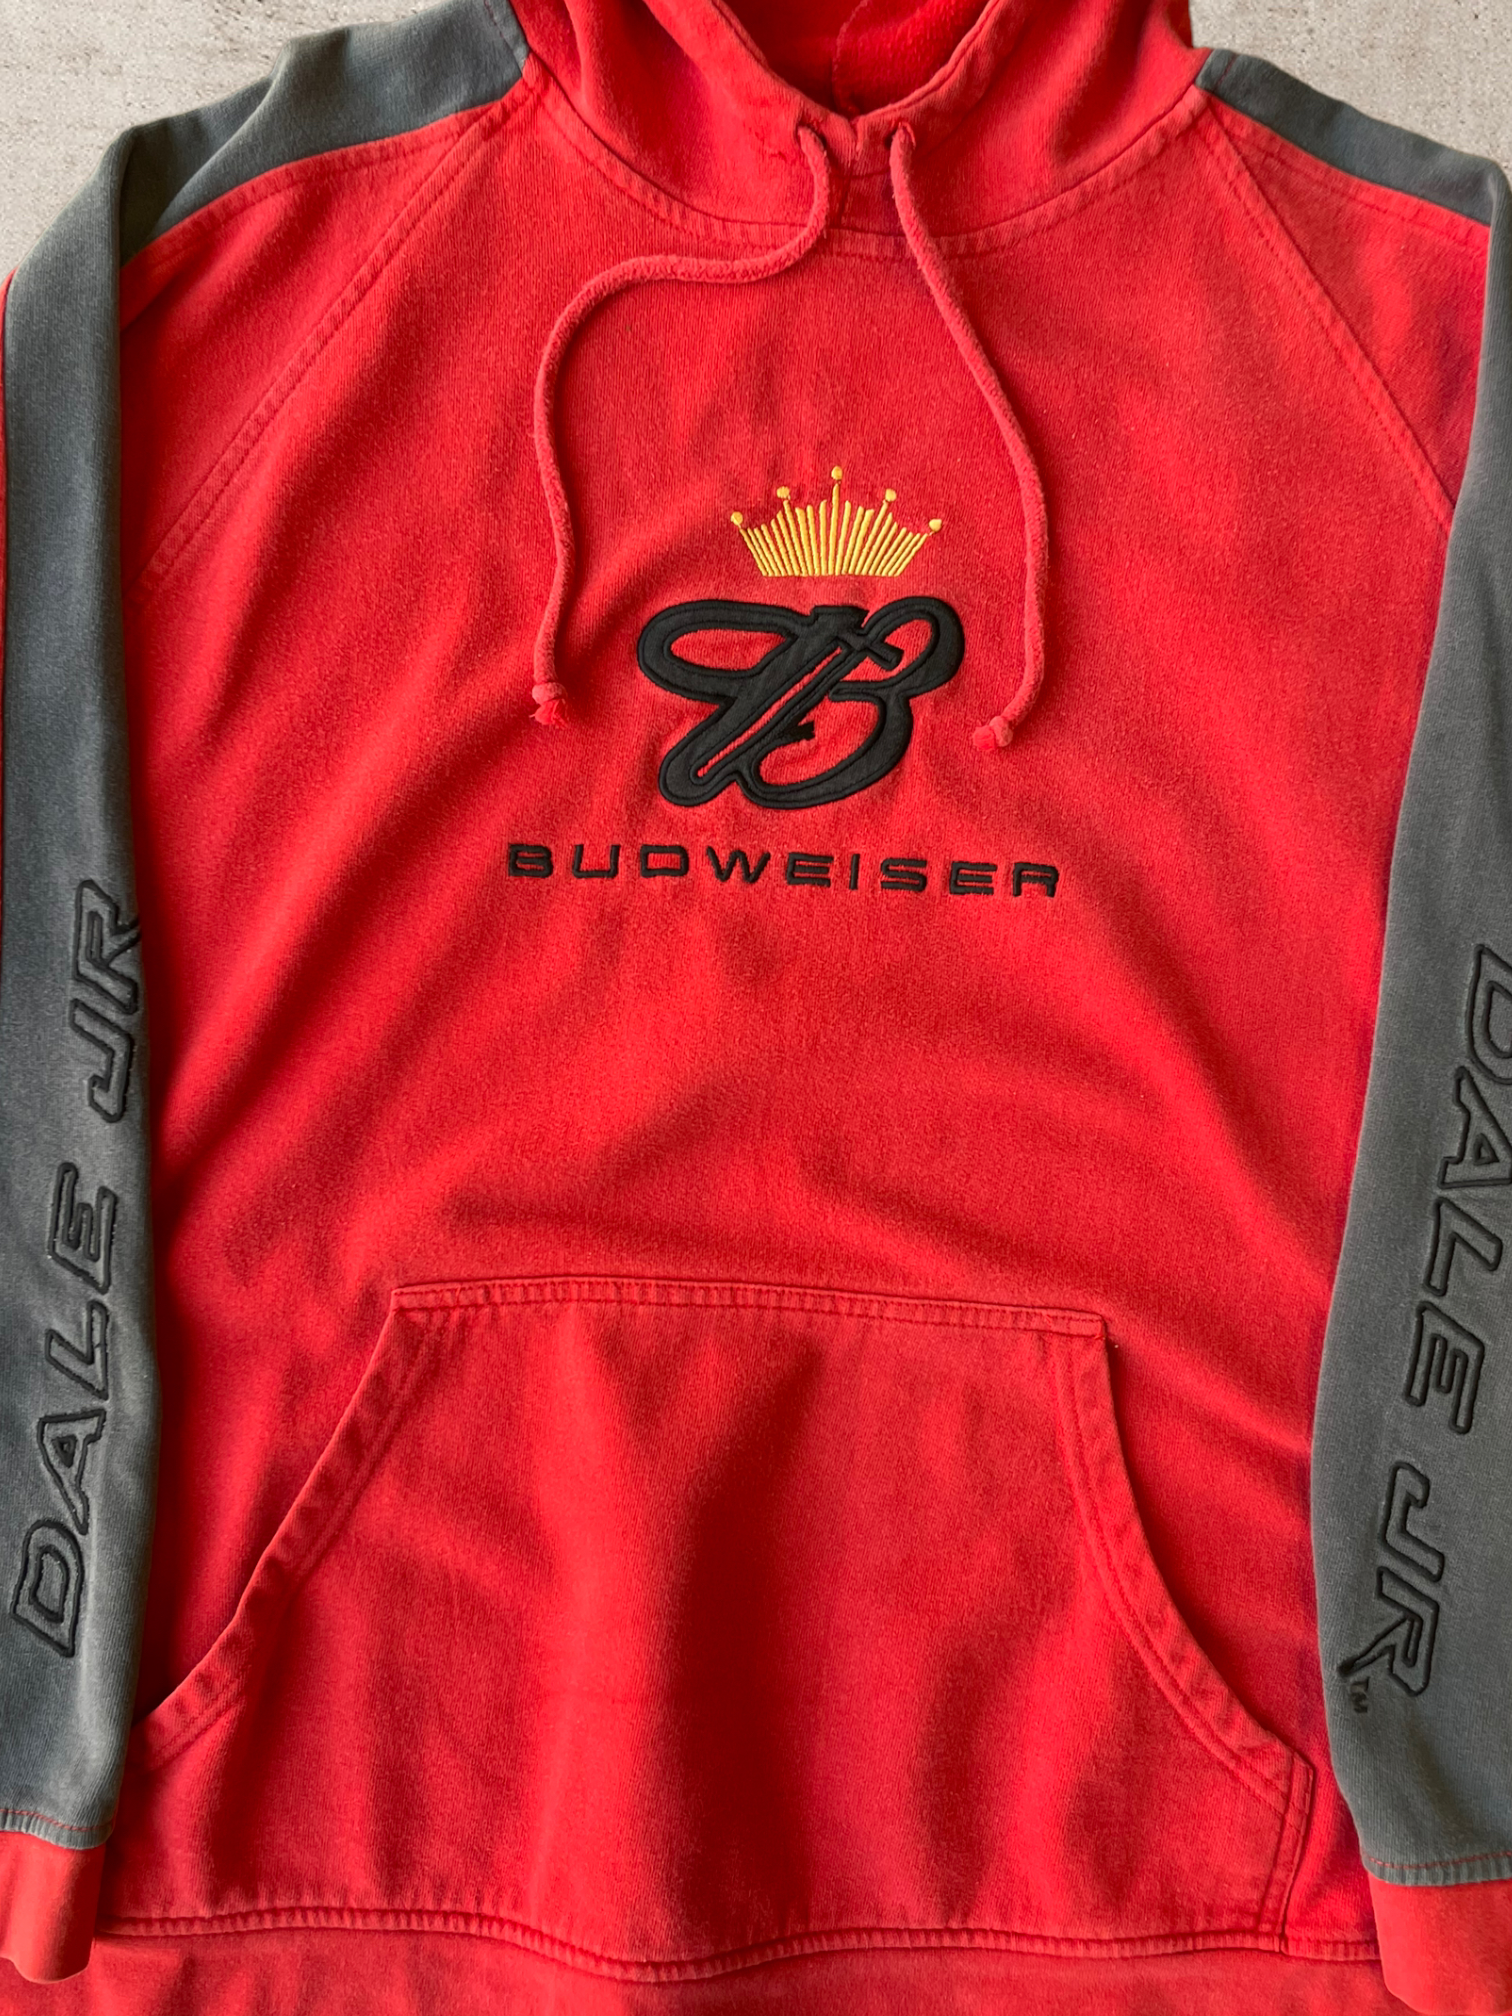 Vintage Budweiser Racing Sweatshirt - XL